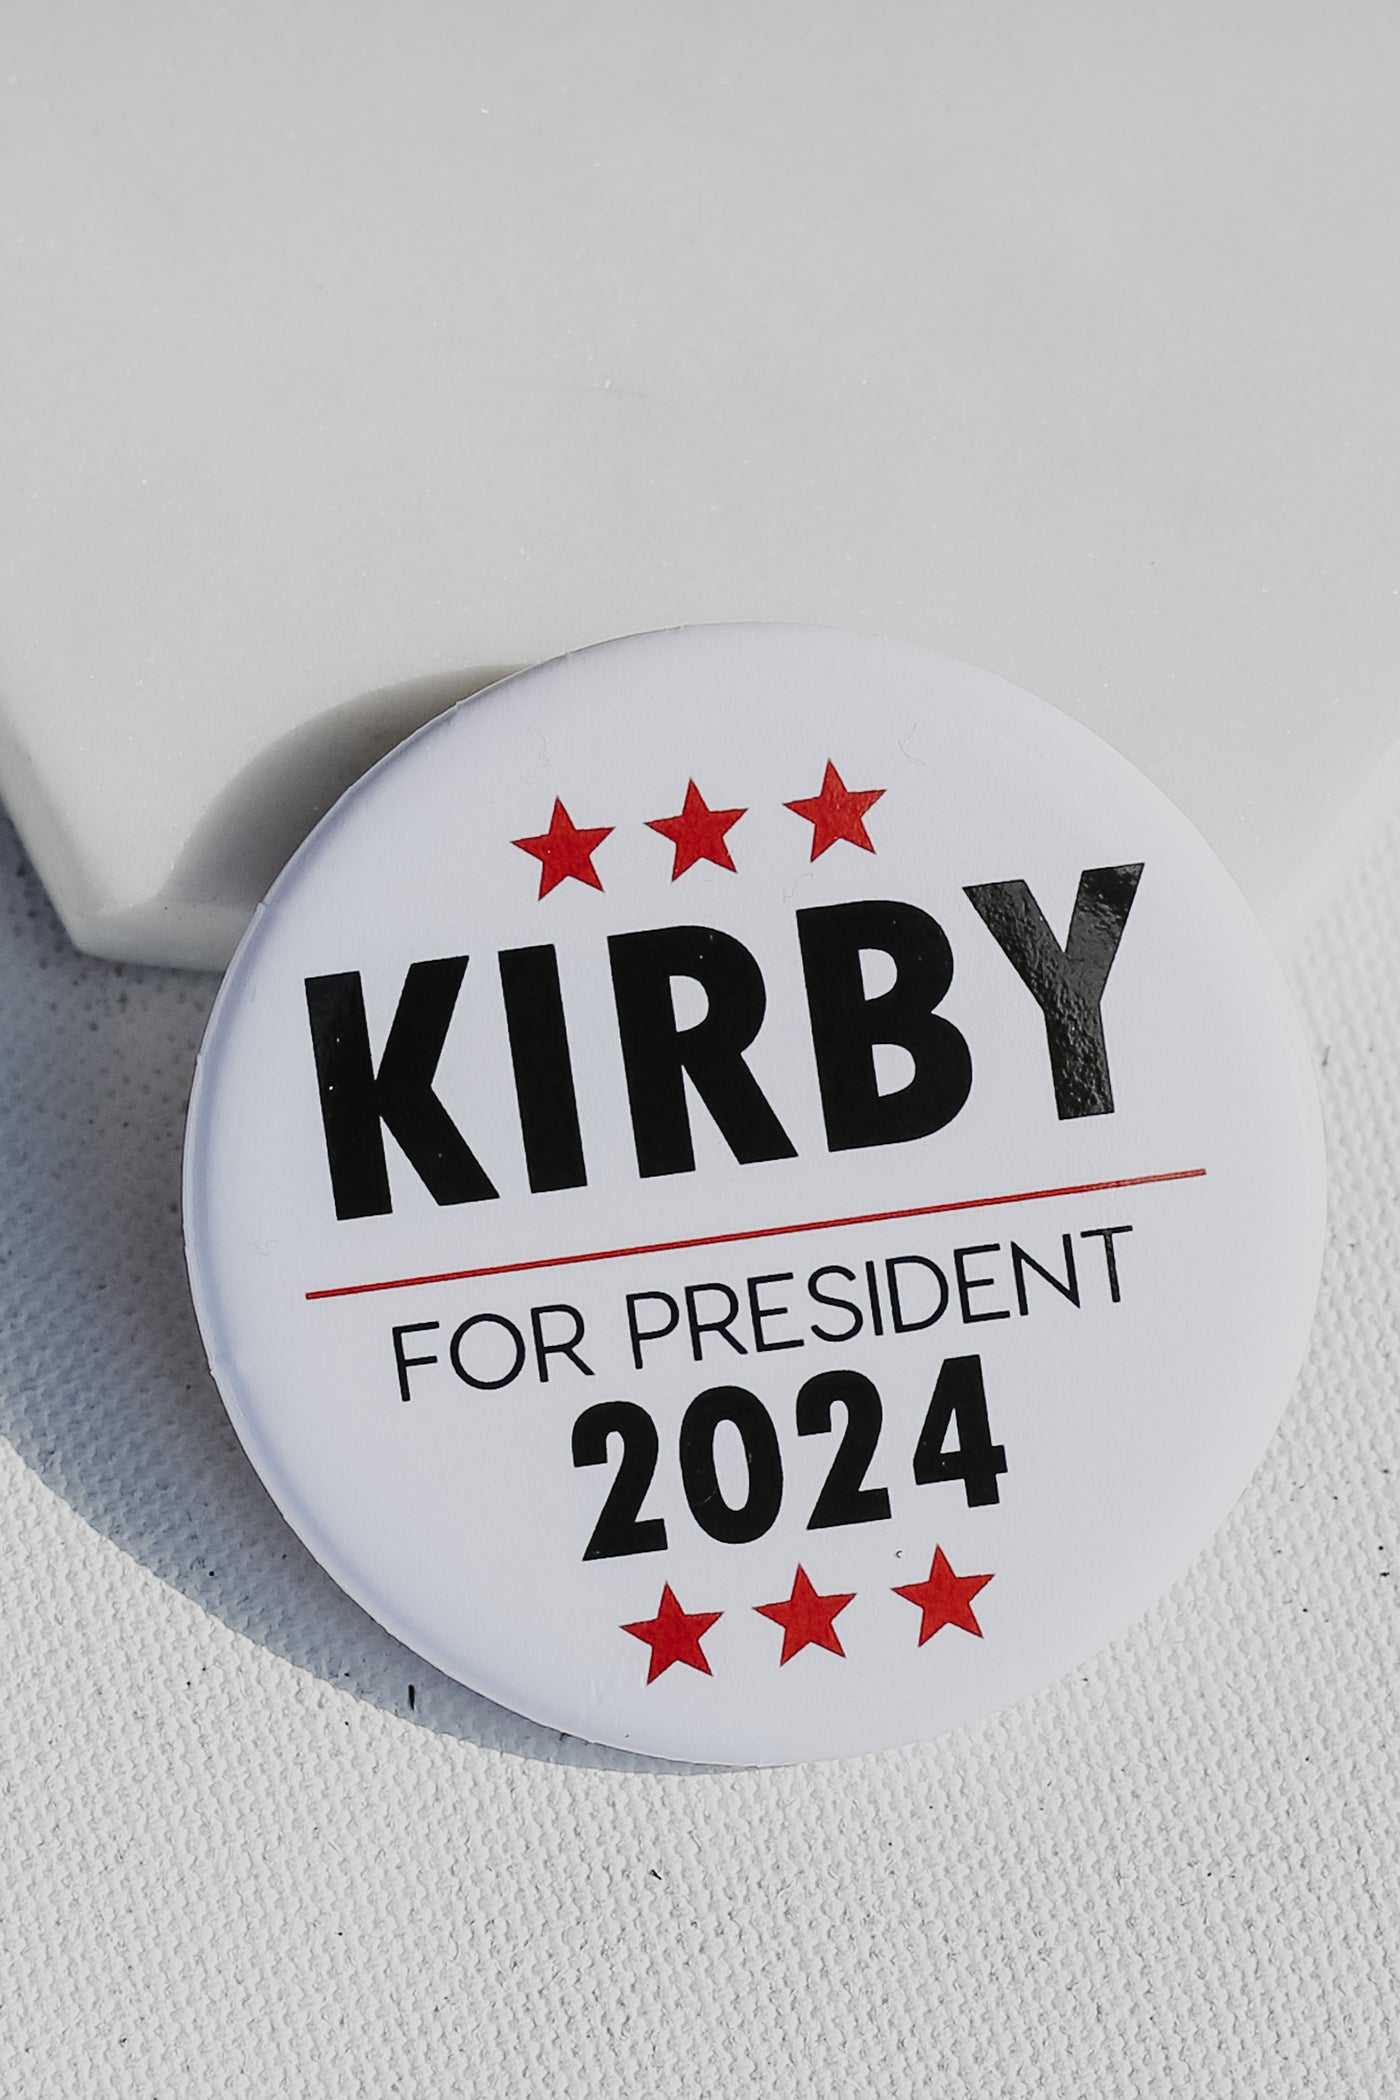 Kirby for President